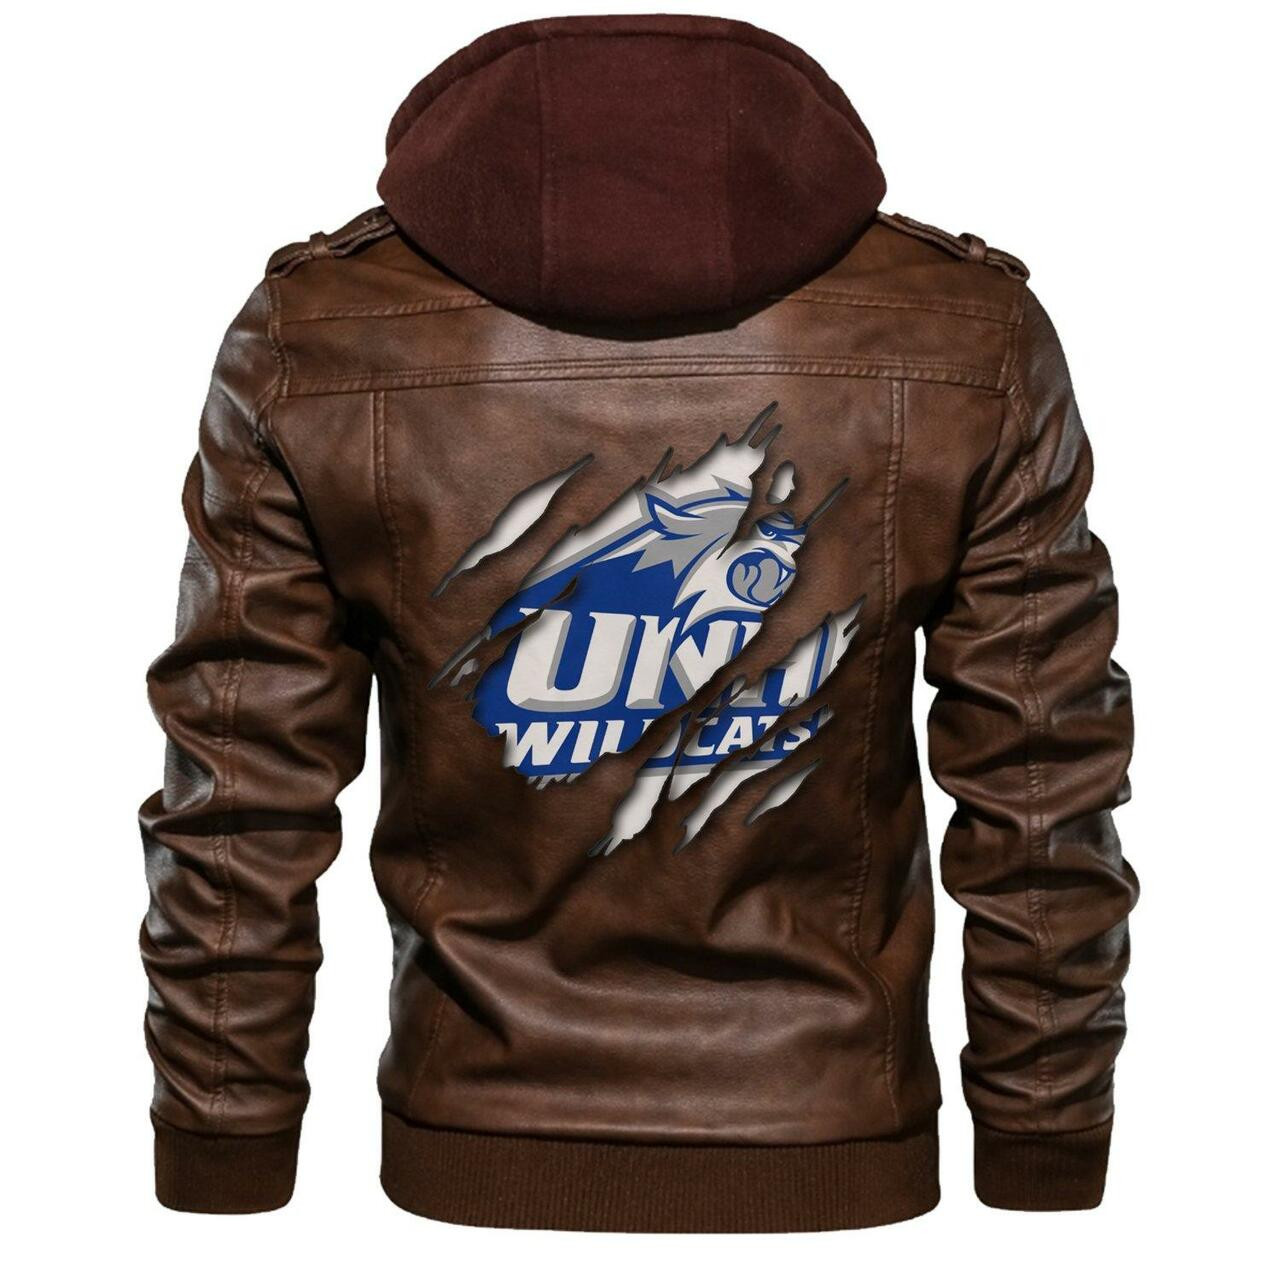 Top leather jacket Sells Best on Techcomshop 3